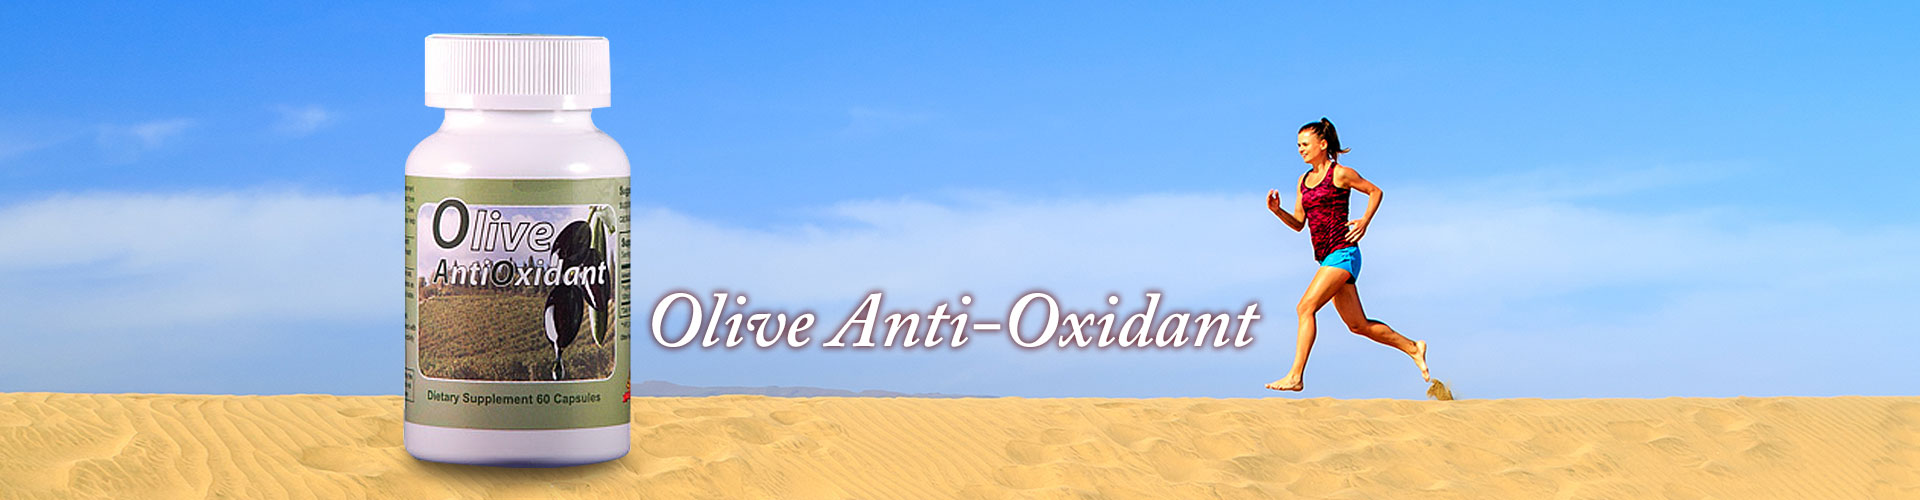 olive anti-oxidant